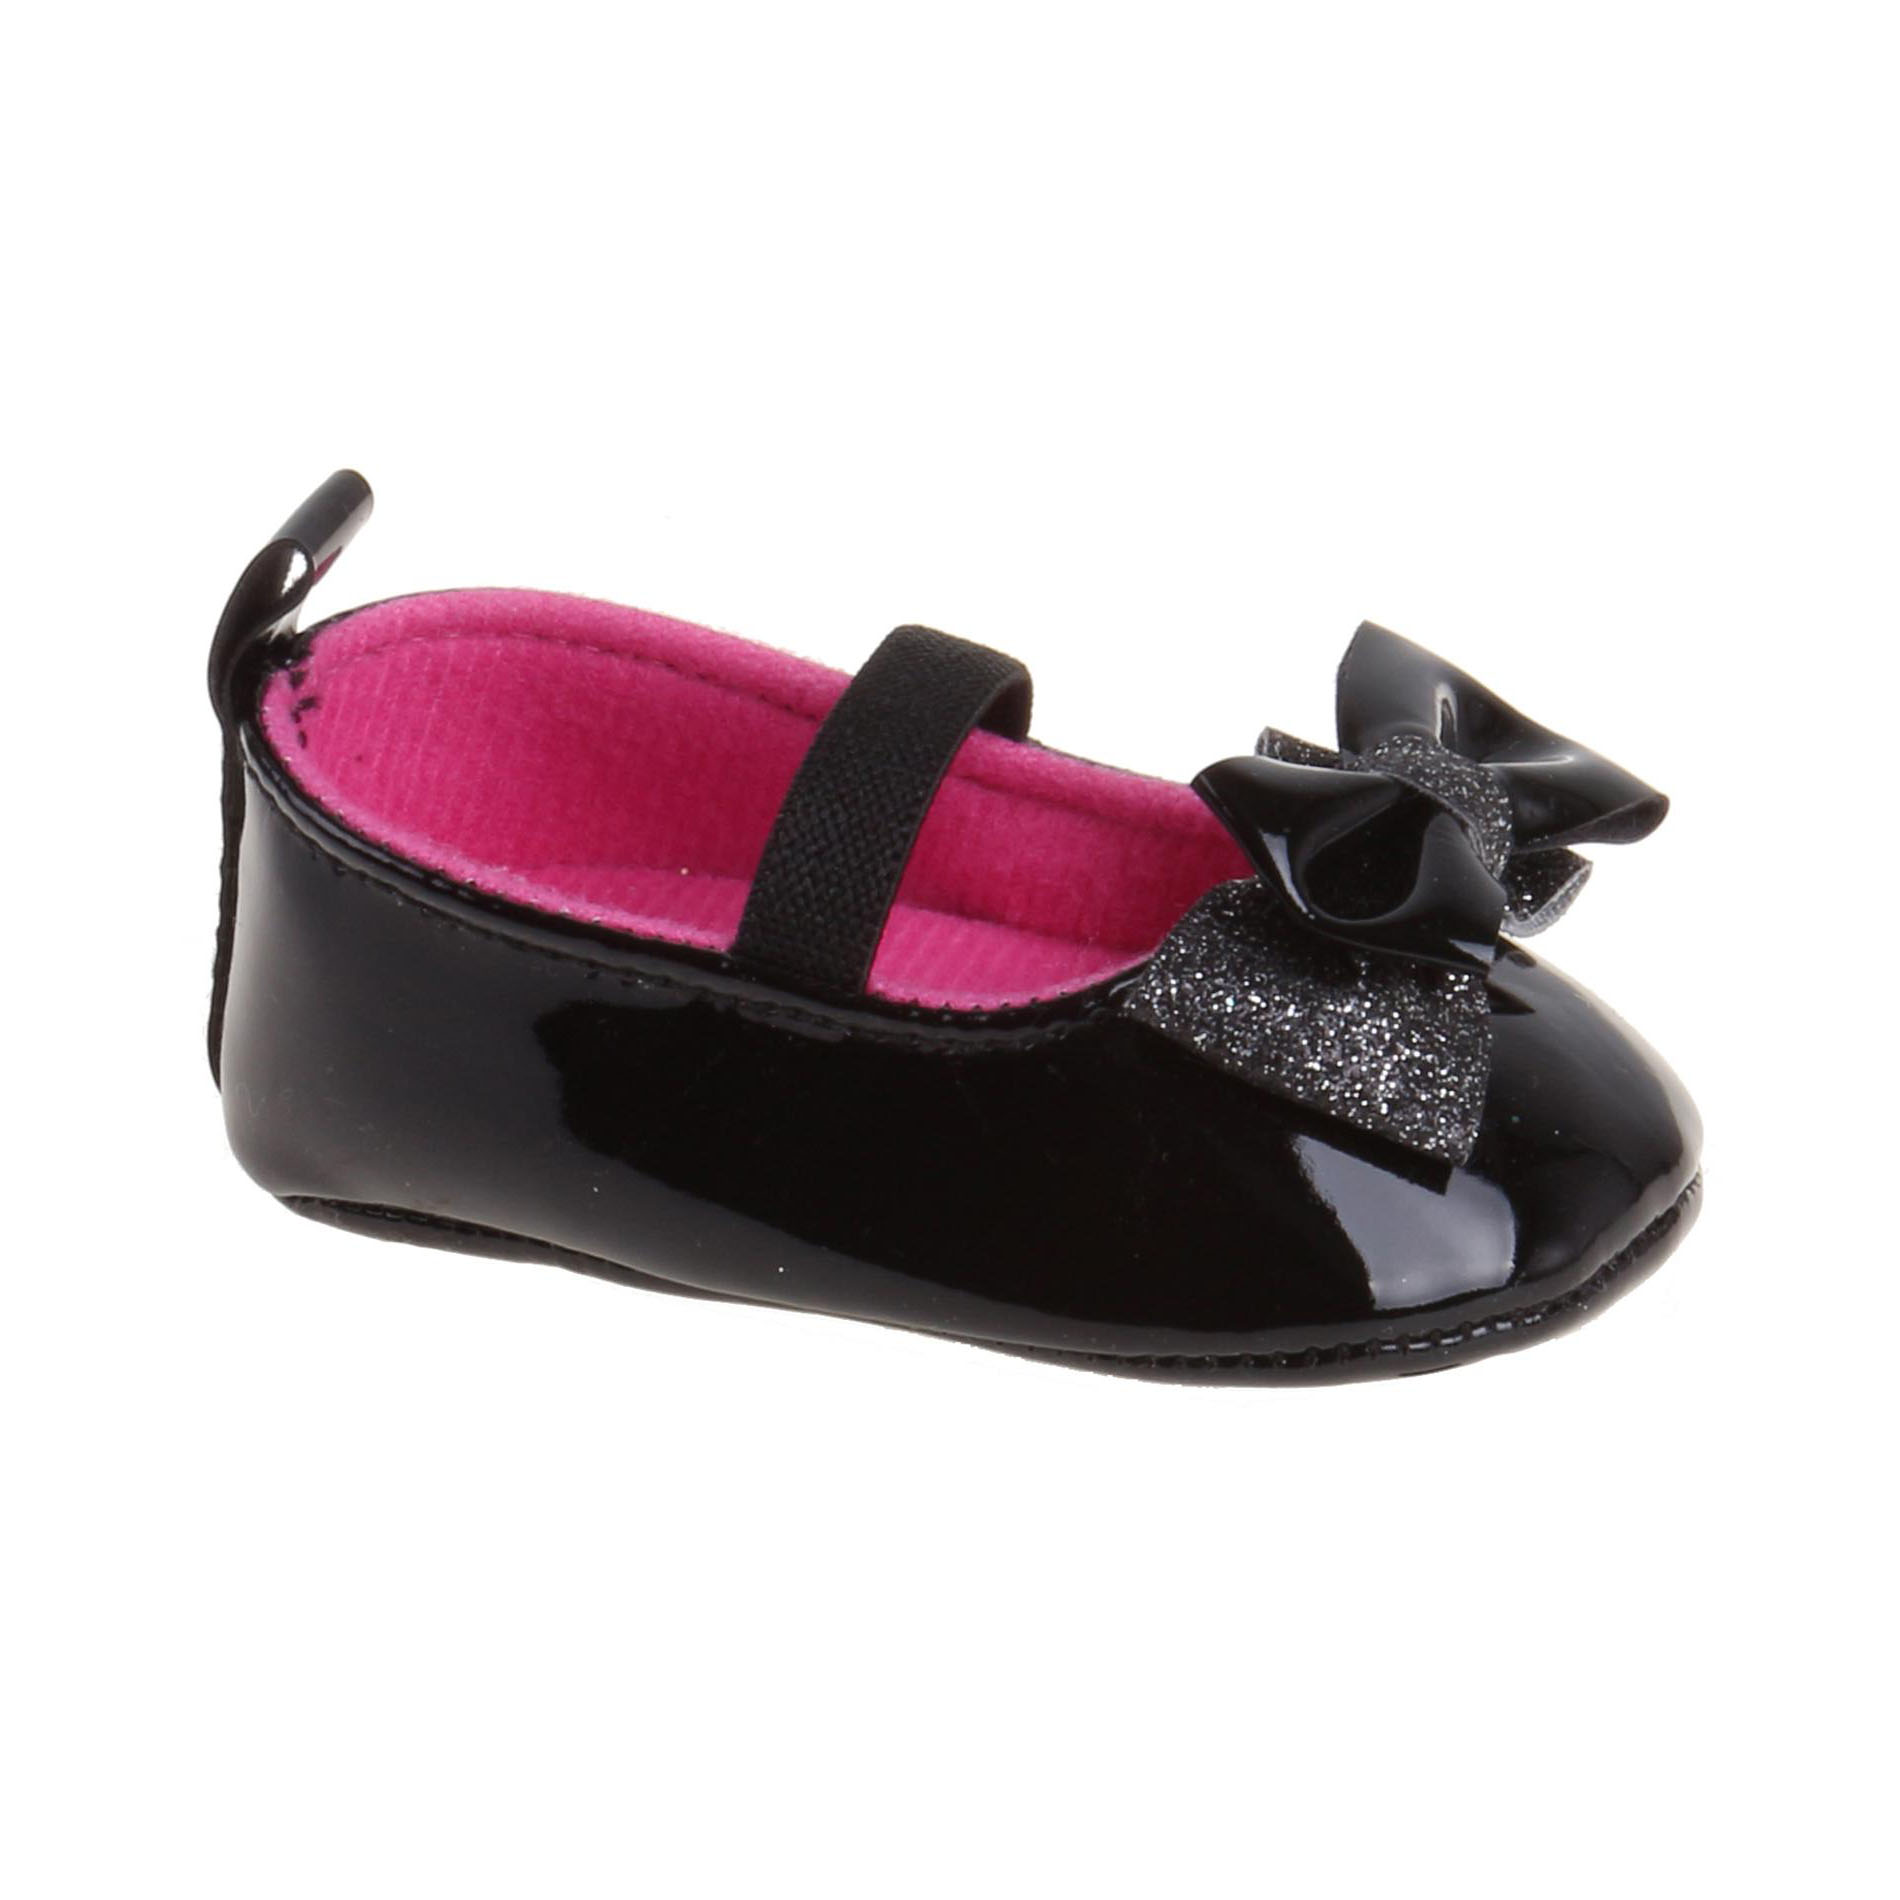 Laura Ashley Baby Girls' Mary Jane Dress Shoe - Black